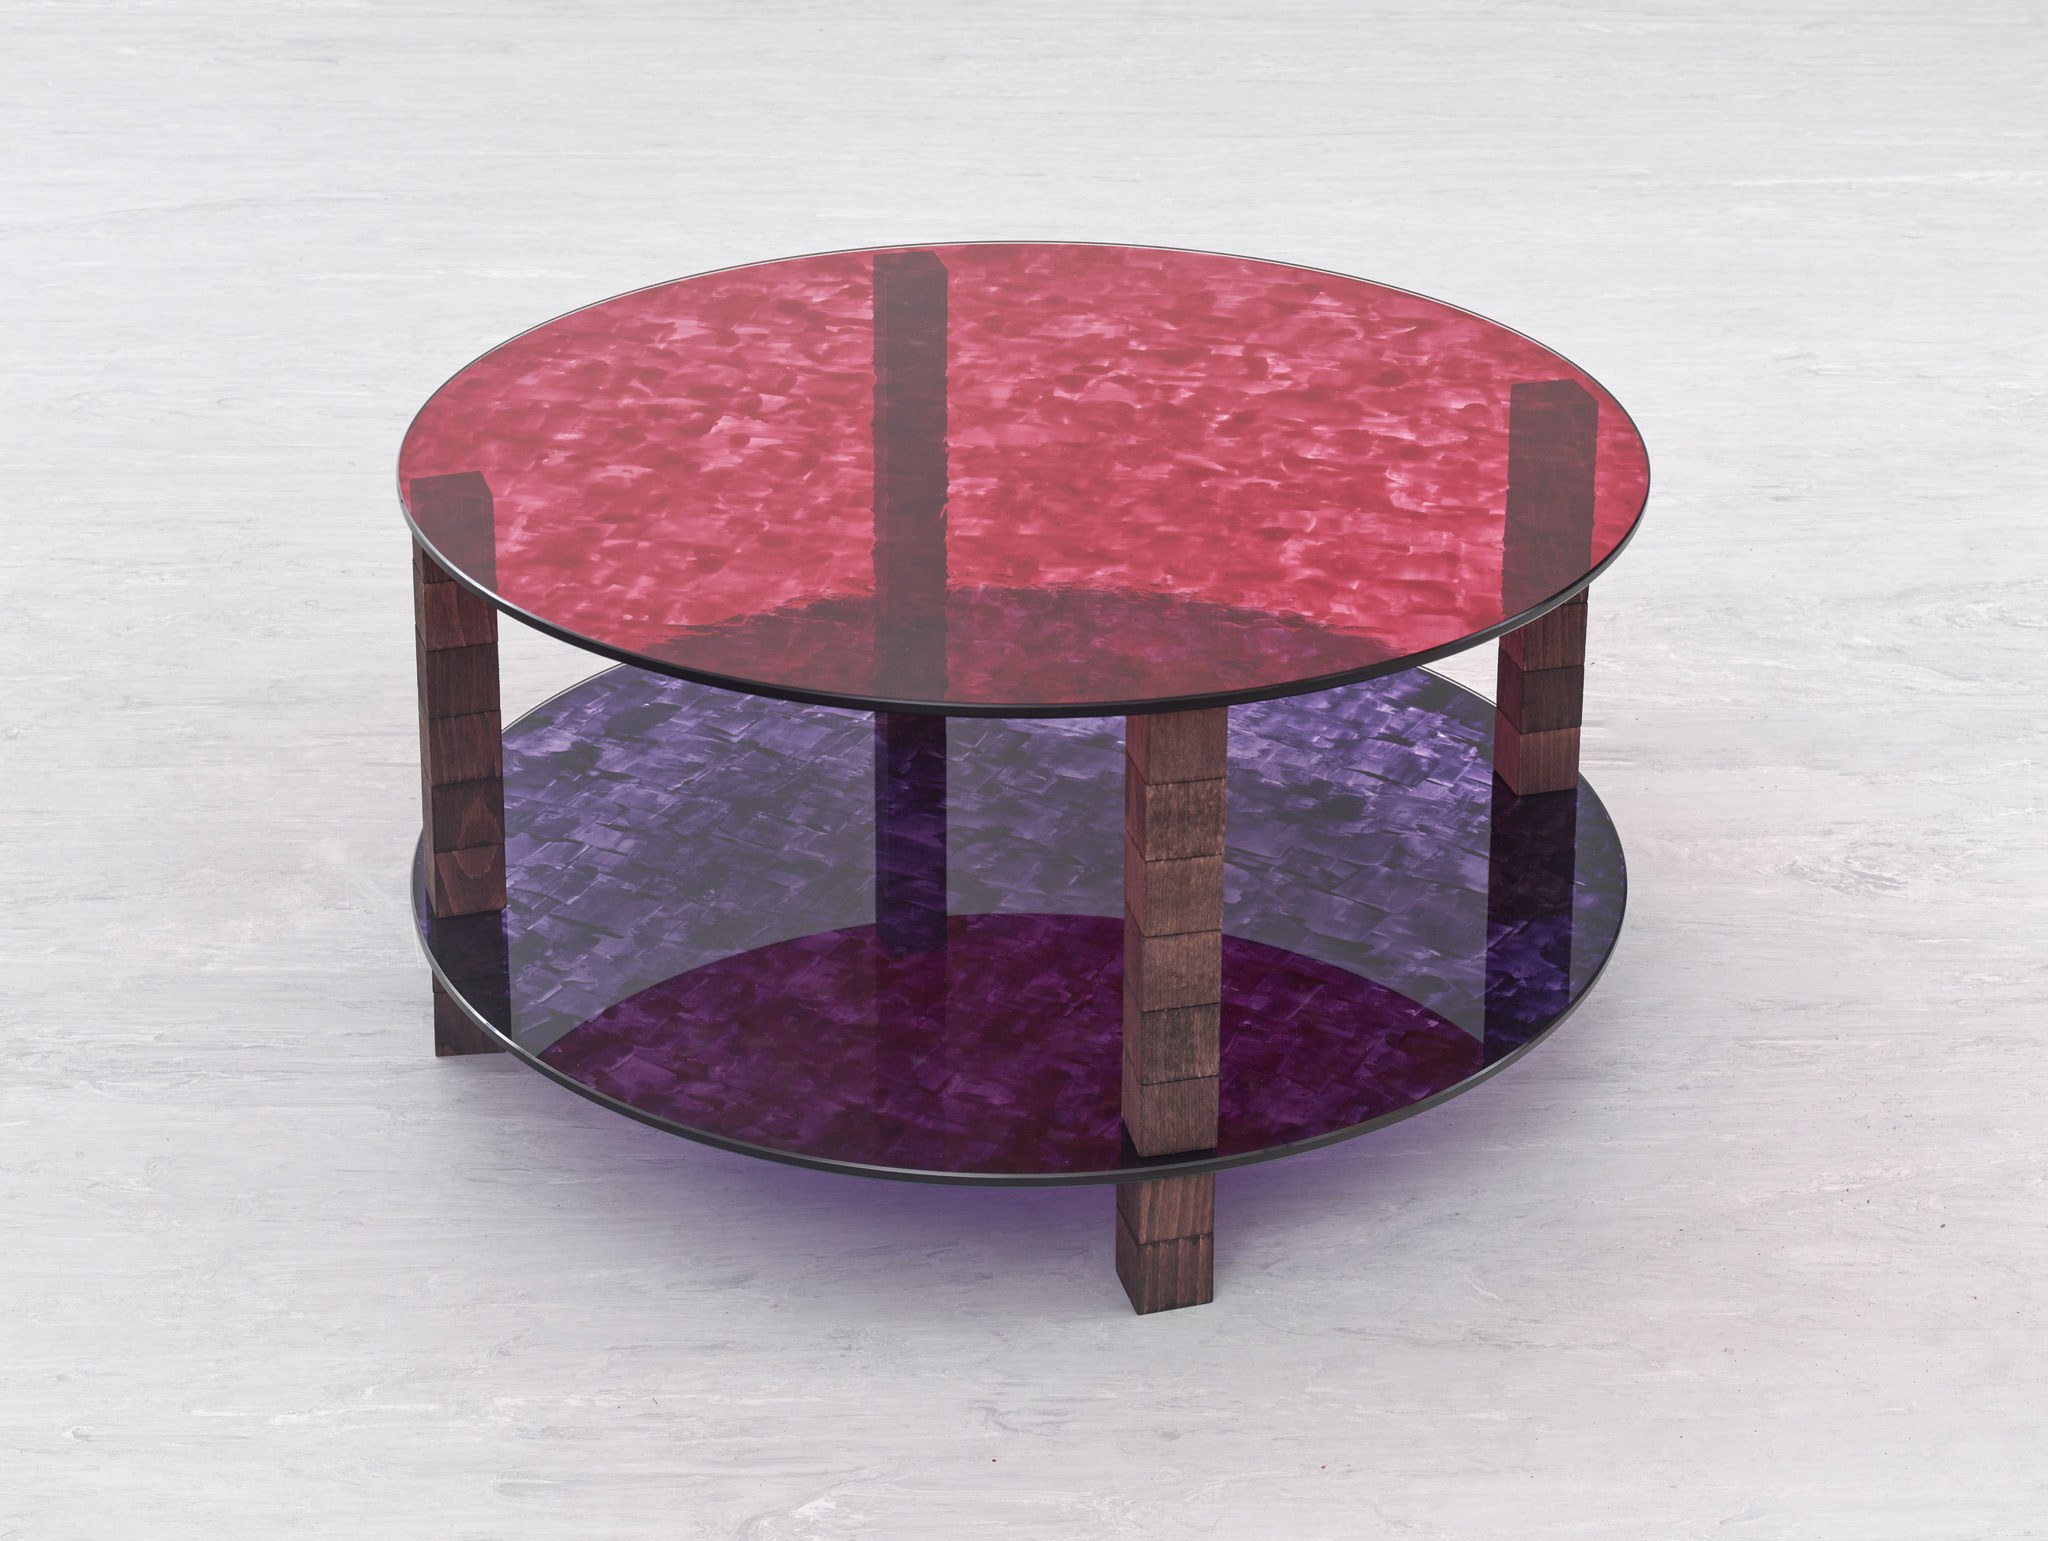 Sunah Choi, "Table Pavillon", 2023, glass, varnish, wood, mordant, 70 x 34 x 70 cm